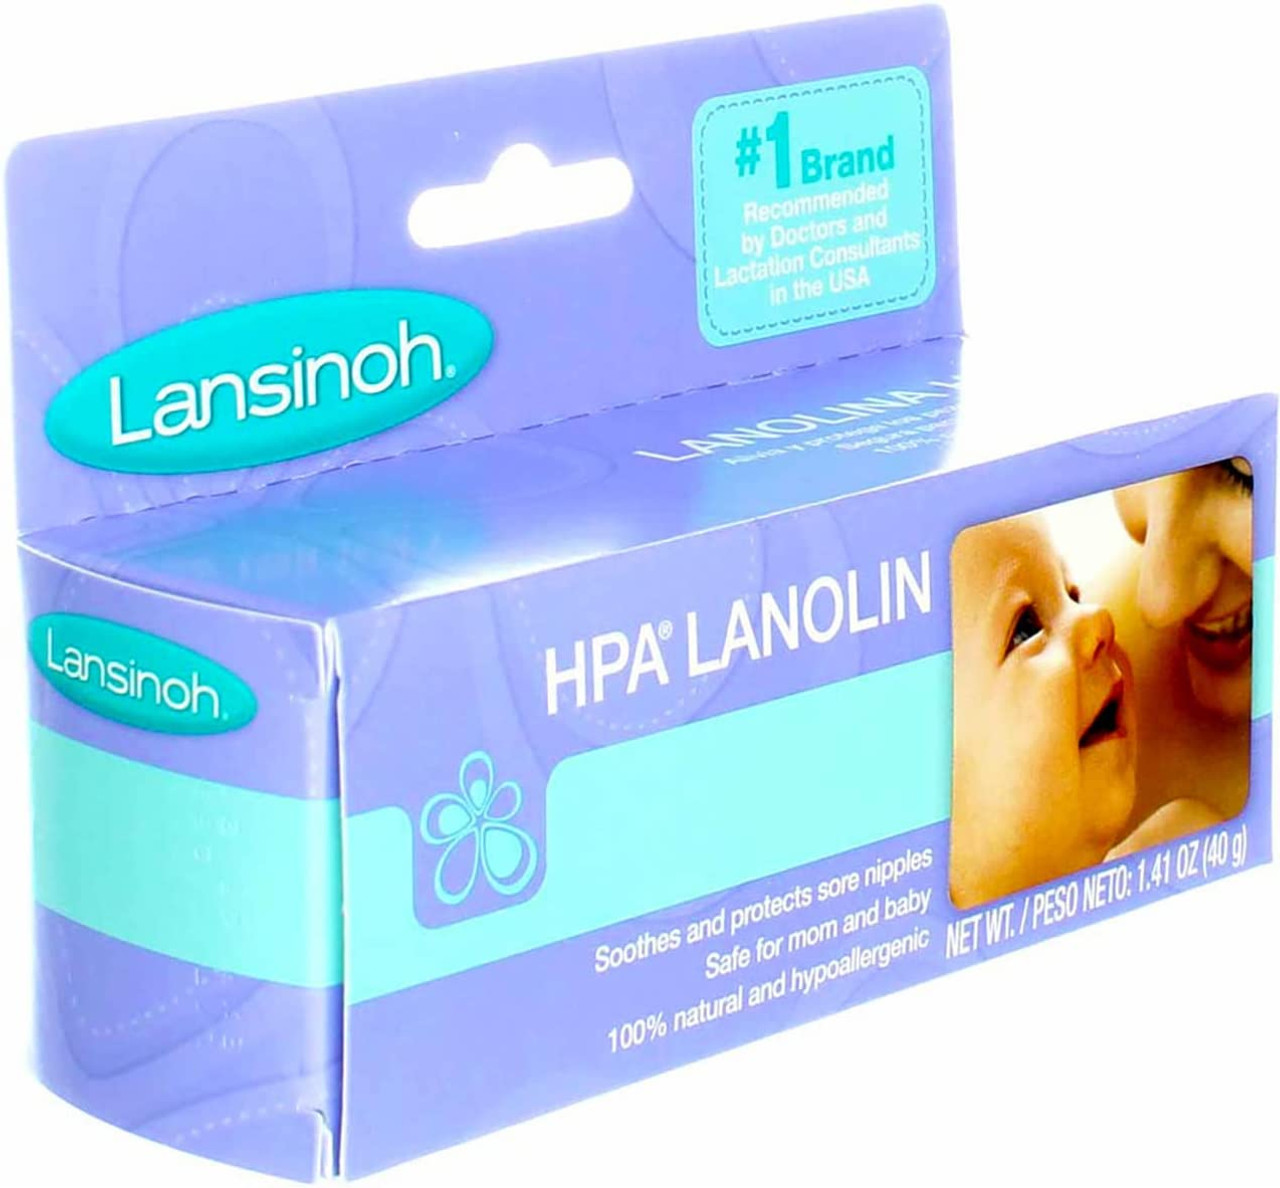 Lansinoh Hpa Lanolin for Breastfeeding Mothers, 1.41 Oz (Pack of 3)